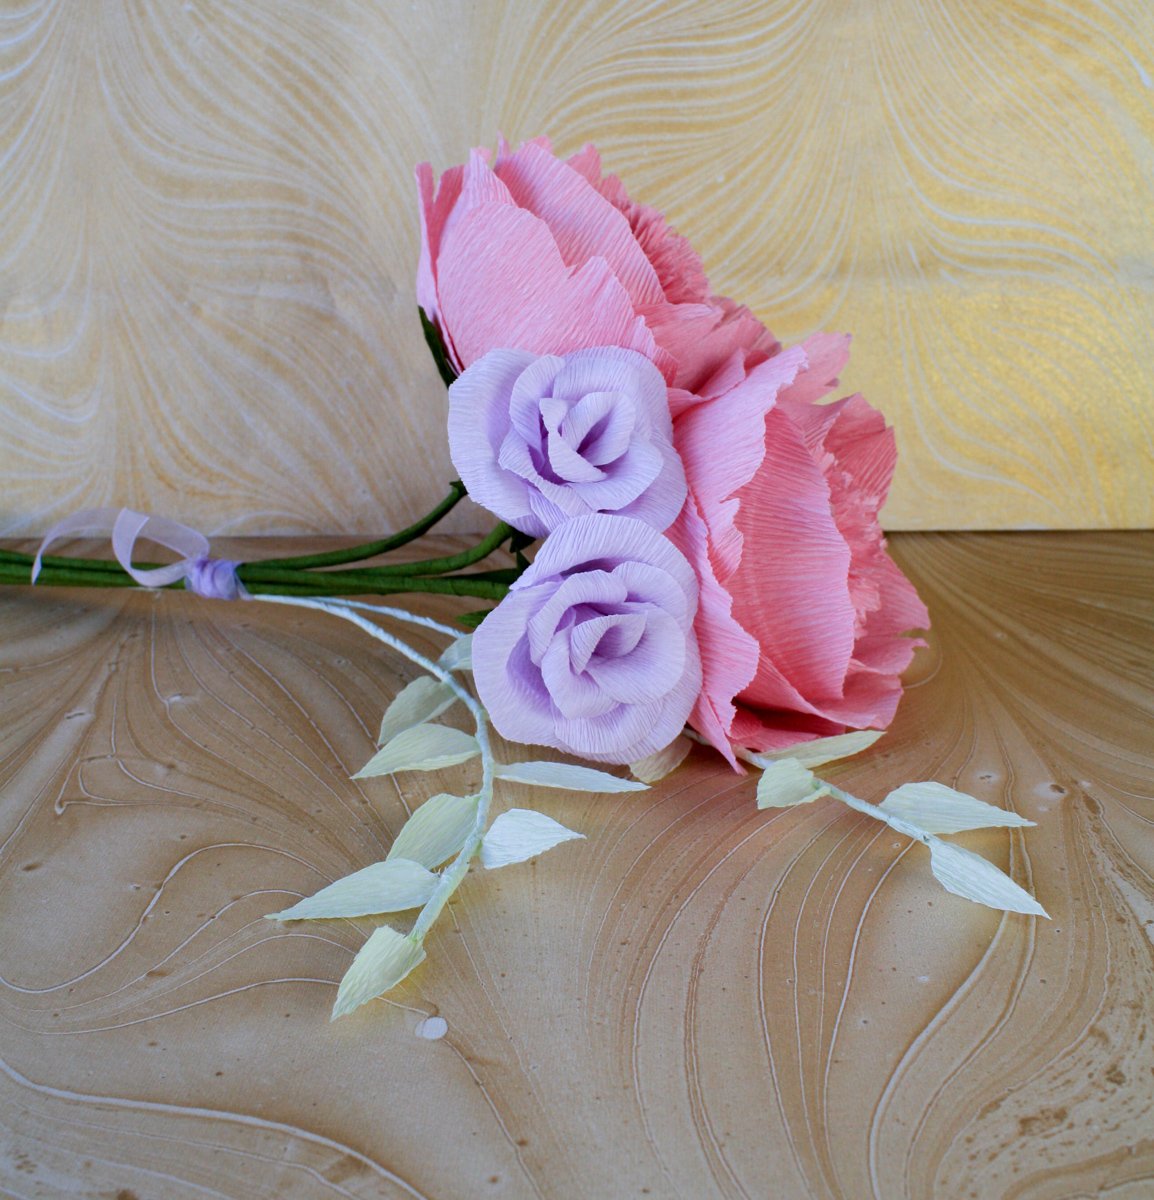 DIY Crepe Paper Floral BouquetThe Flair Exchange®